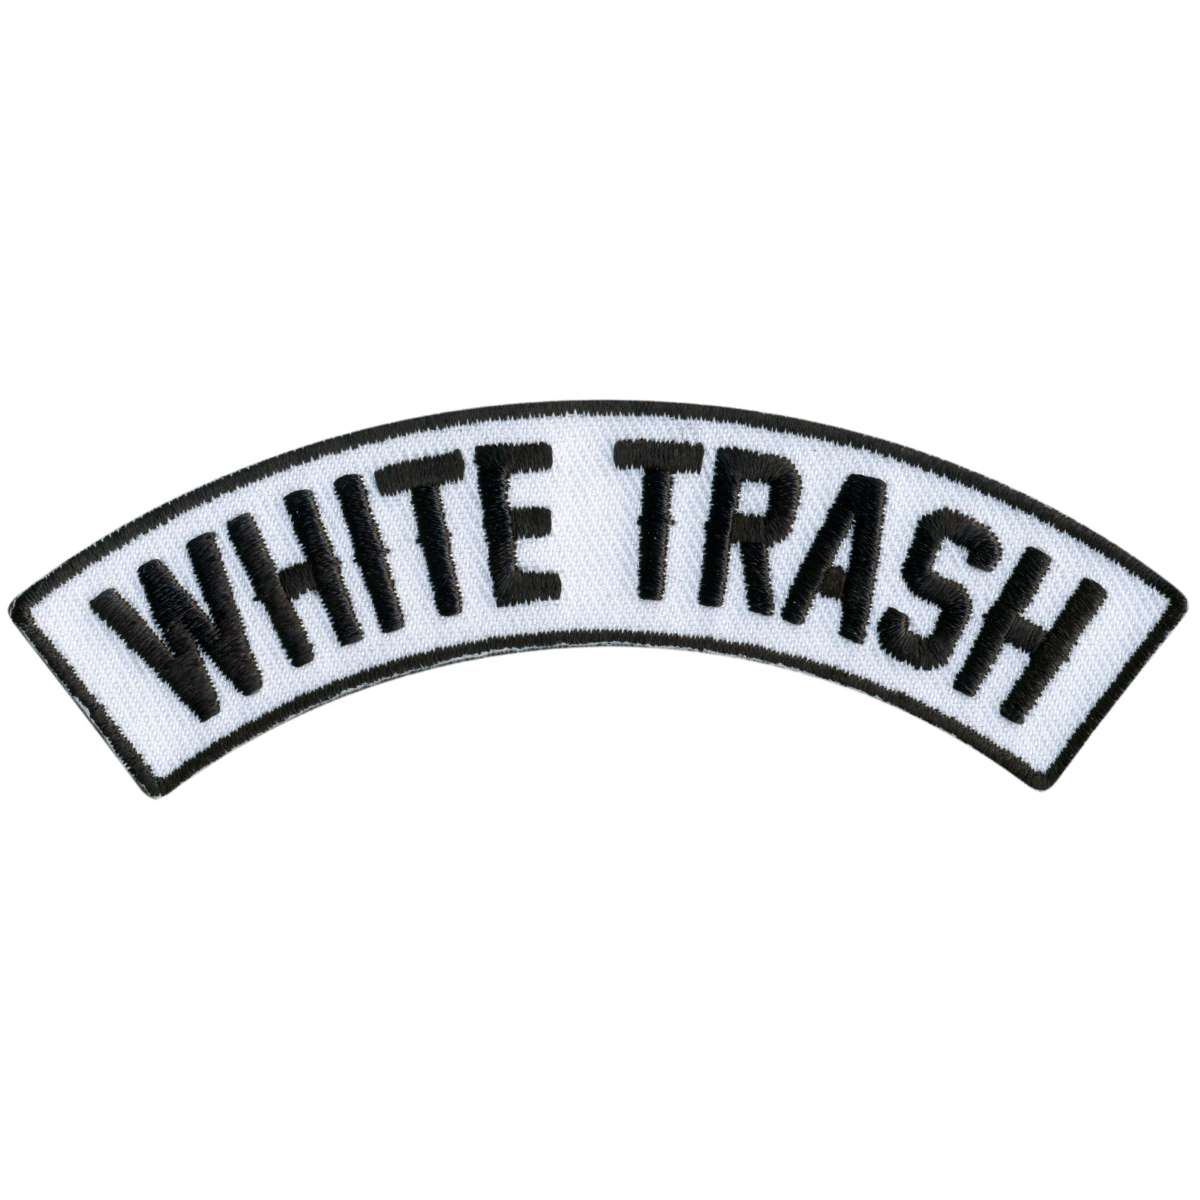 Hot Leathers White Trash 4” X 1” Top Rocker Patch PPM4210